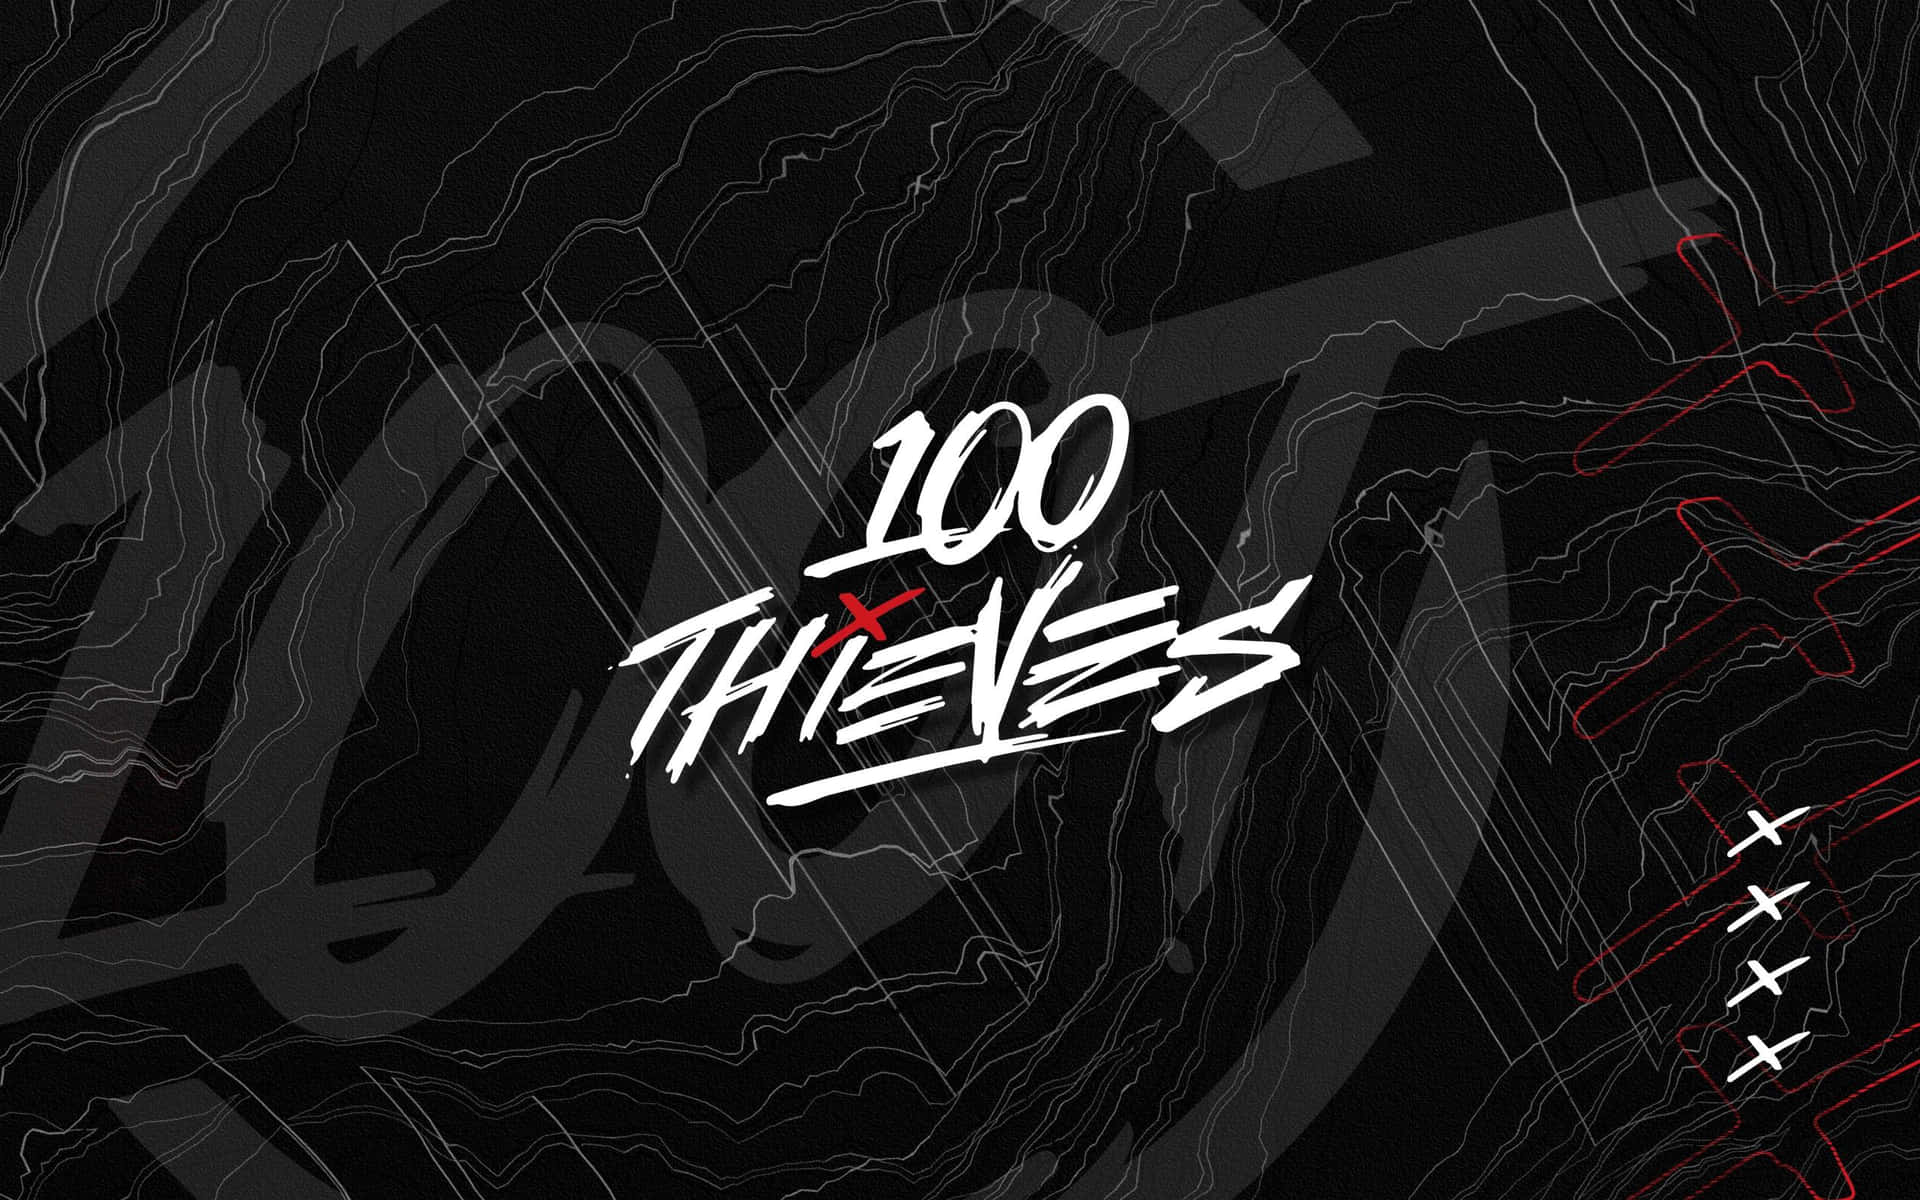 Repräsentiert100 Thieves: H1ghr Music Wallpaper